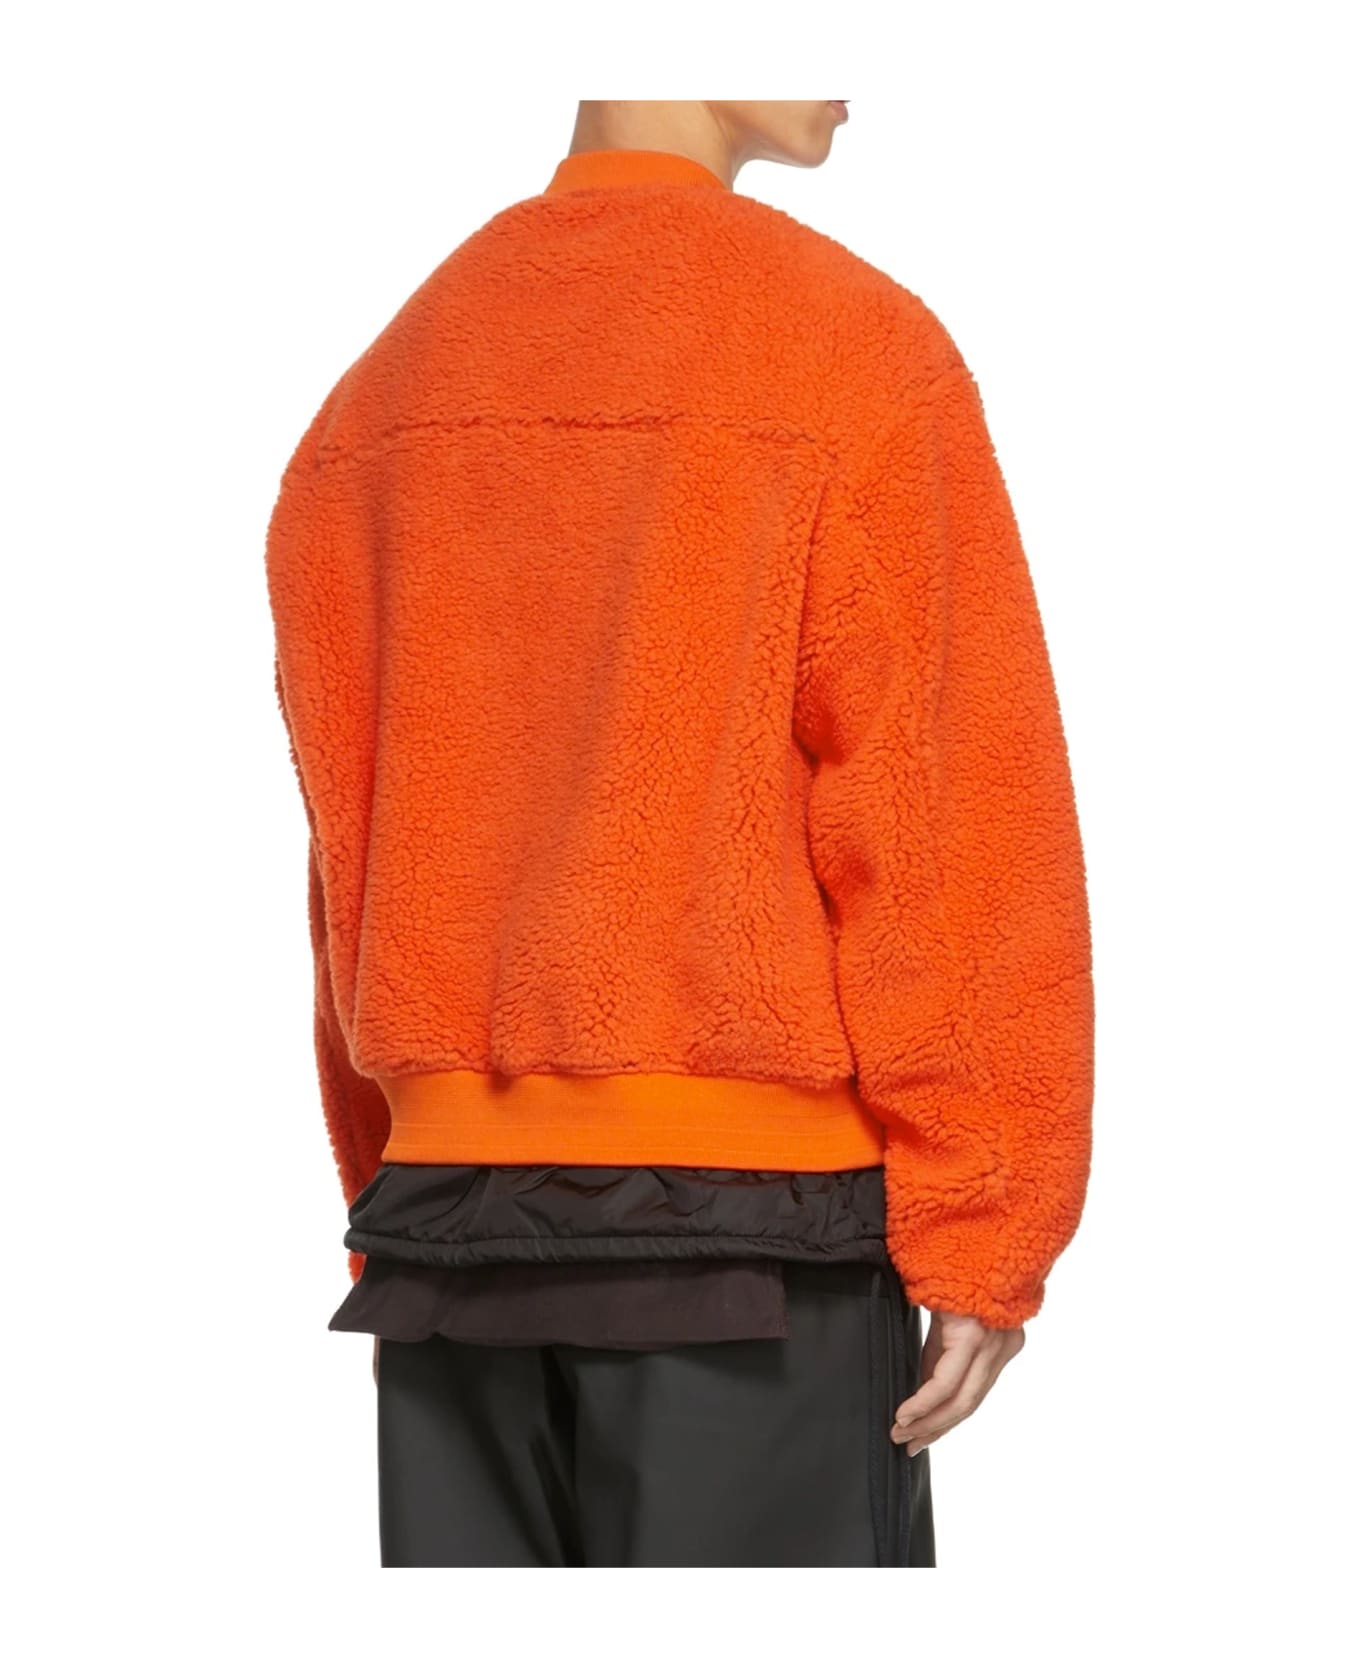 AMBUSH Wool Logo Sweatshirt - Orange フリース